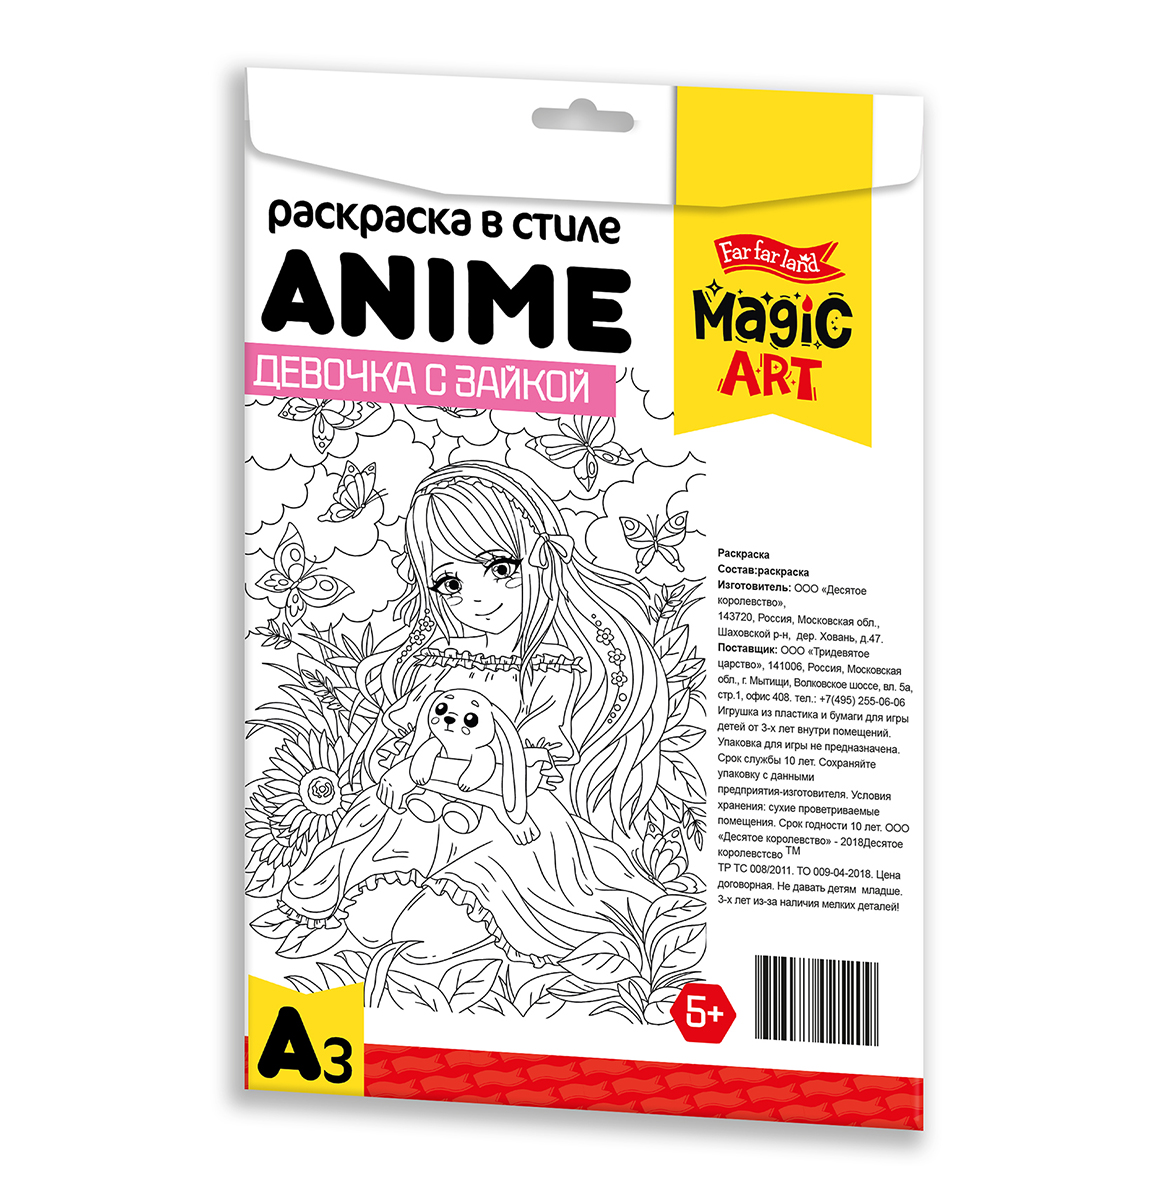 Раскраска в стиле ANIME Девочка с зайкой (формат А3) (Вид 2)